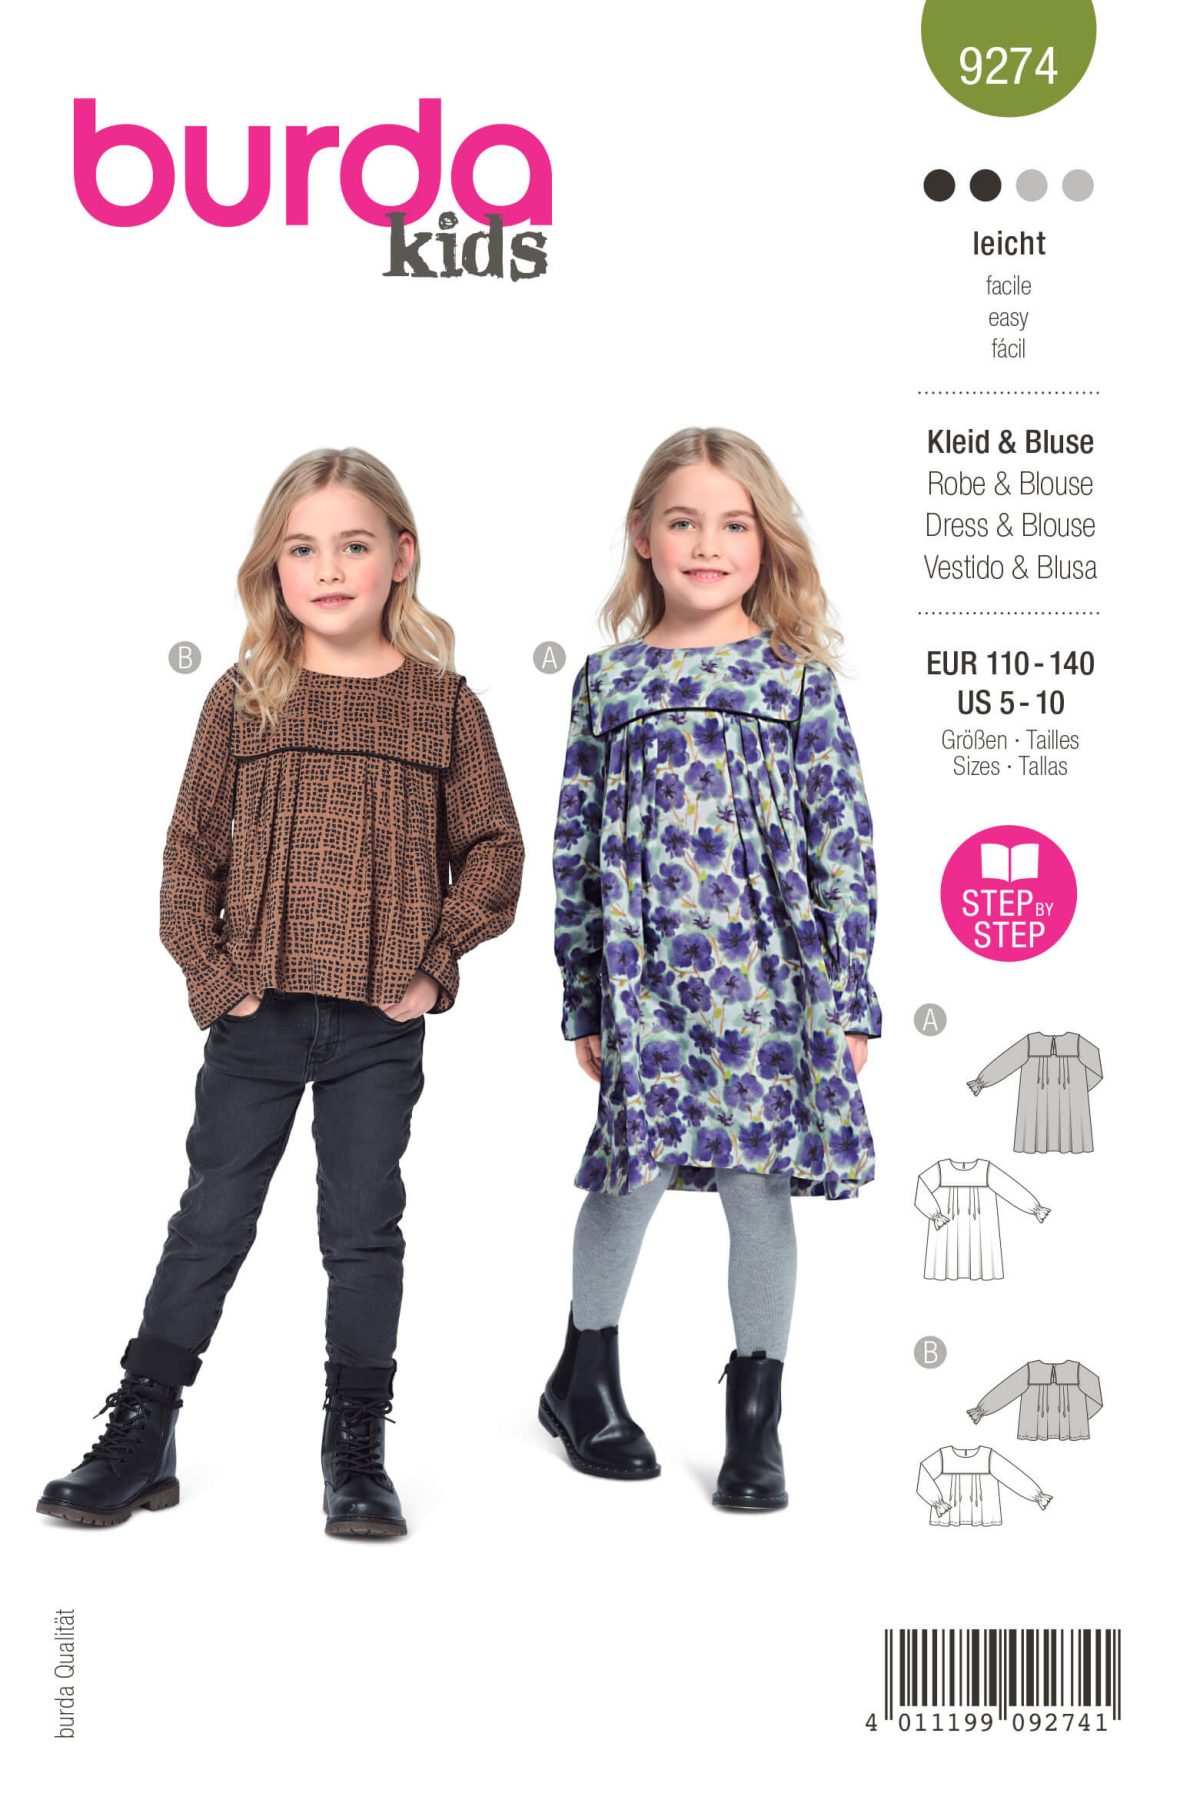 Burda Style Pattern 9274 Children's Dress and Top